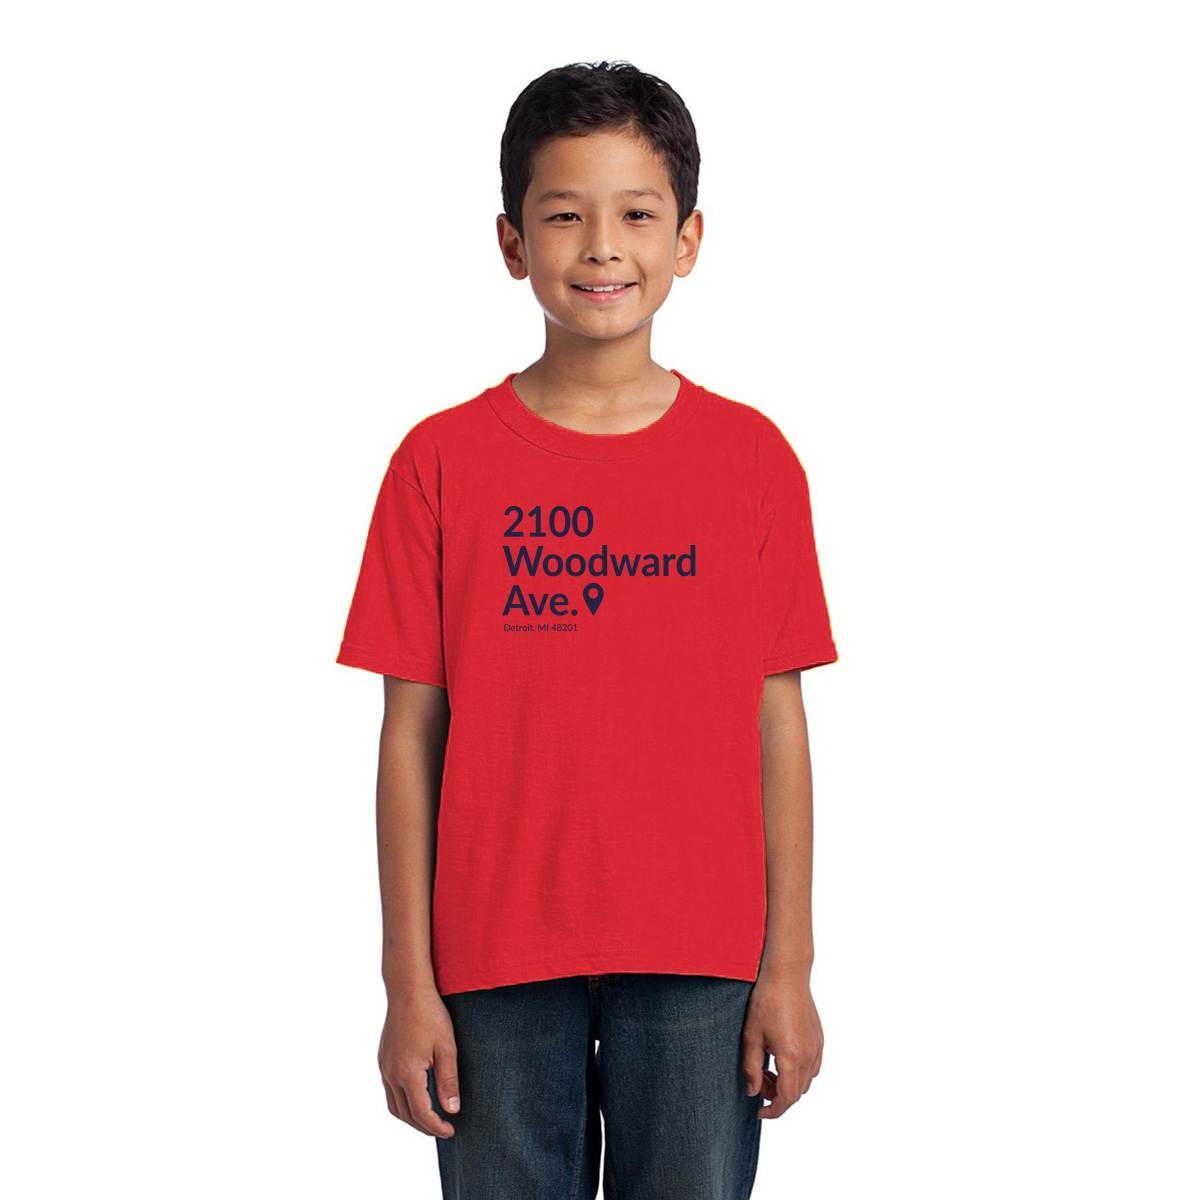 Detroit Baseball Stadium Kids T-shirt | Red